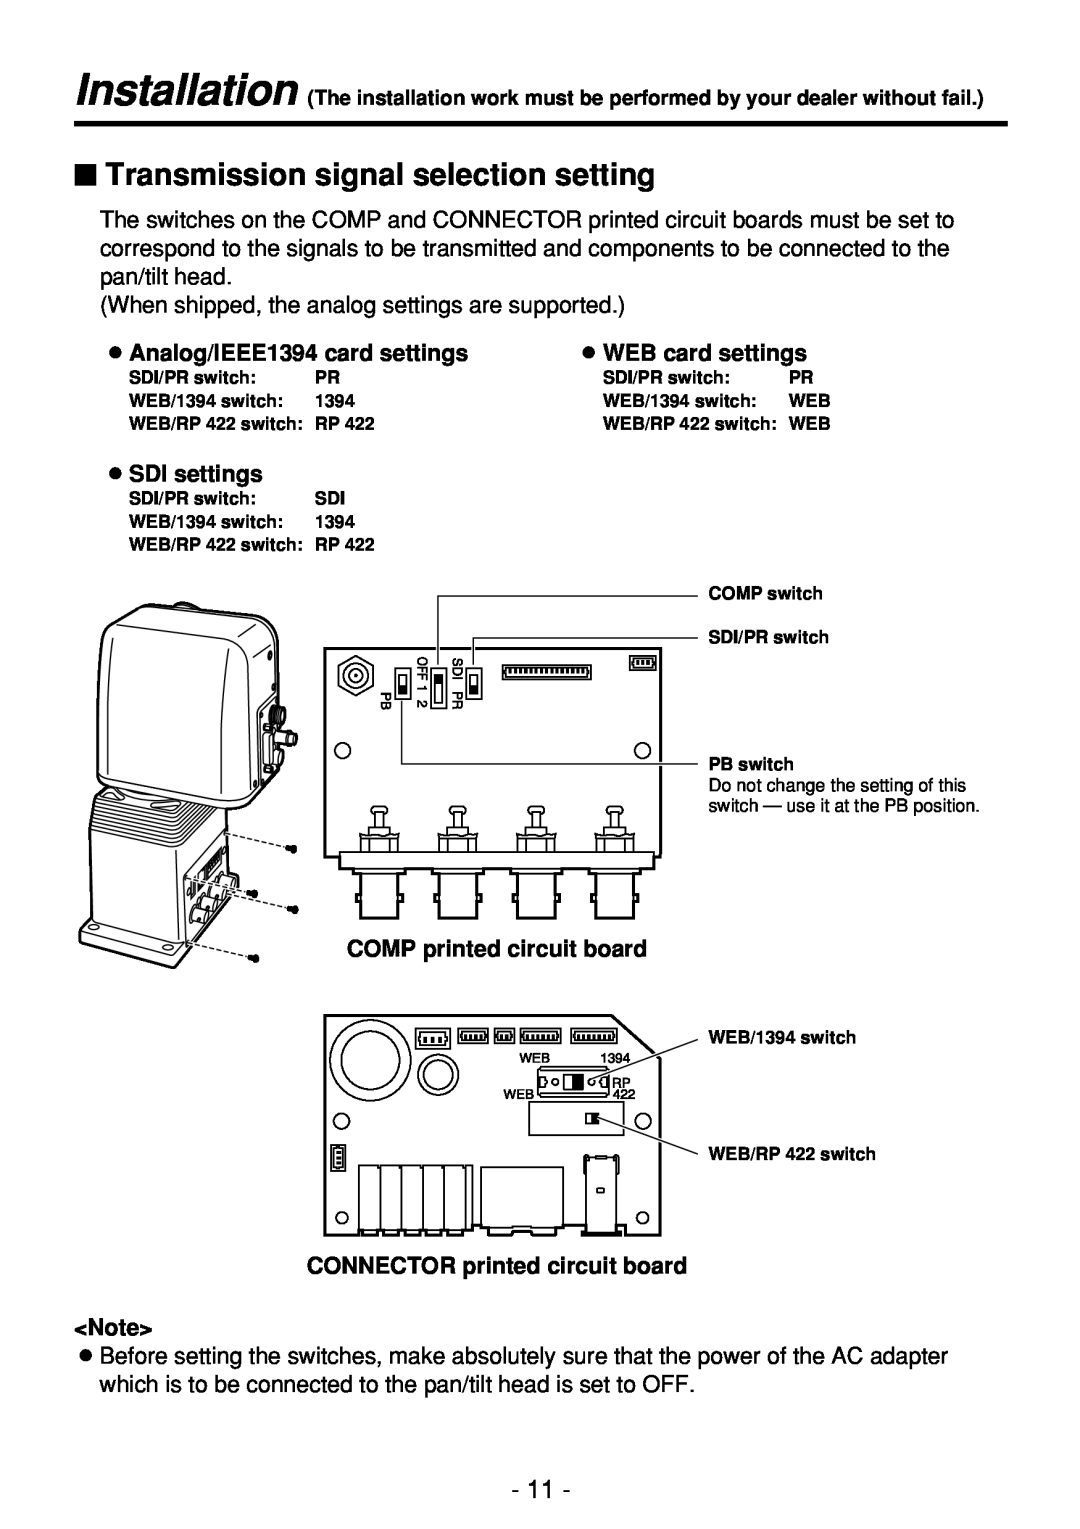 Panasonic AW-PH360N manual $ Transmission signal selection setting, OAnalog/IEEE1394 card settings, OWEB card settings 